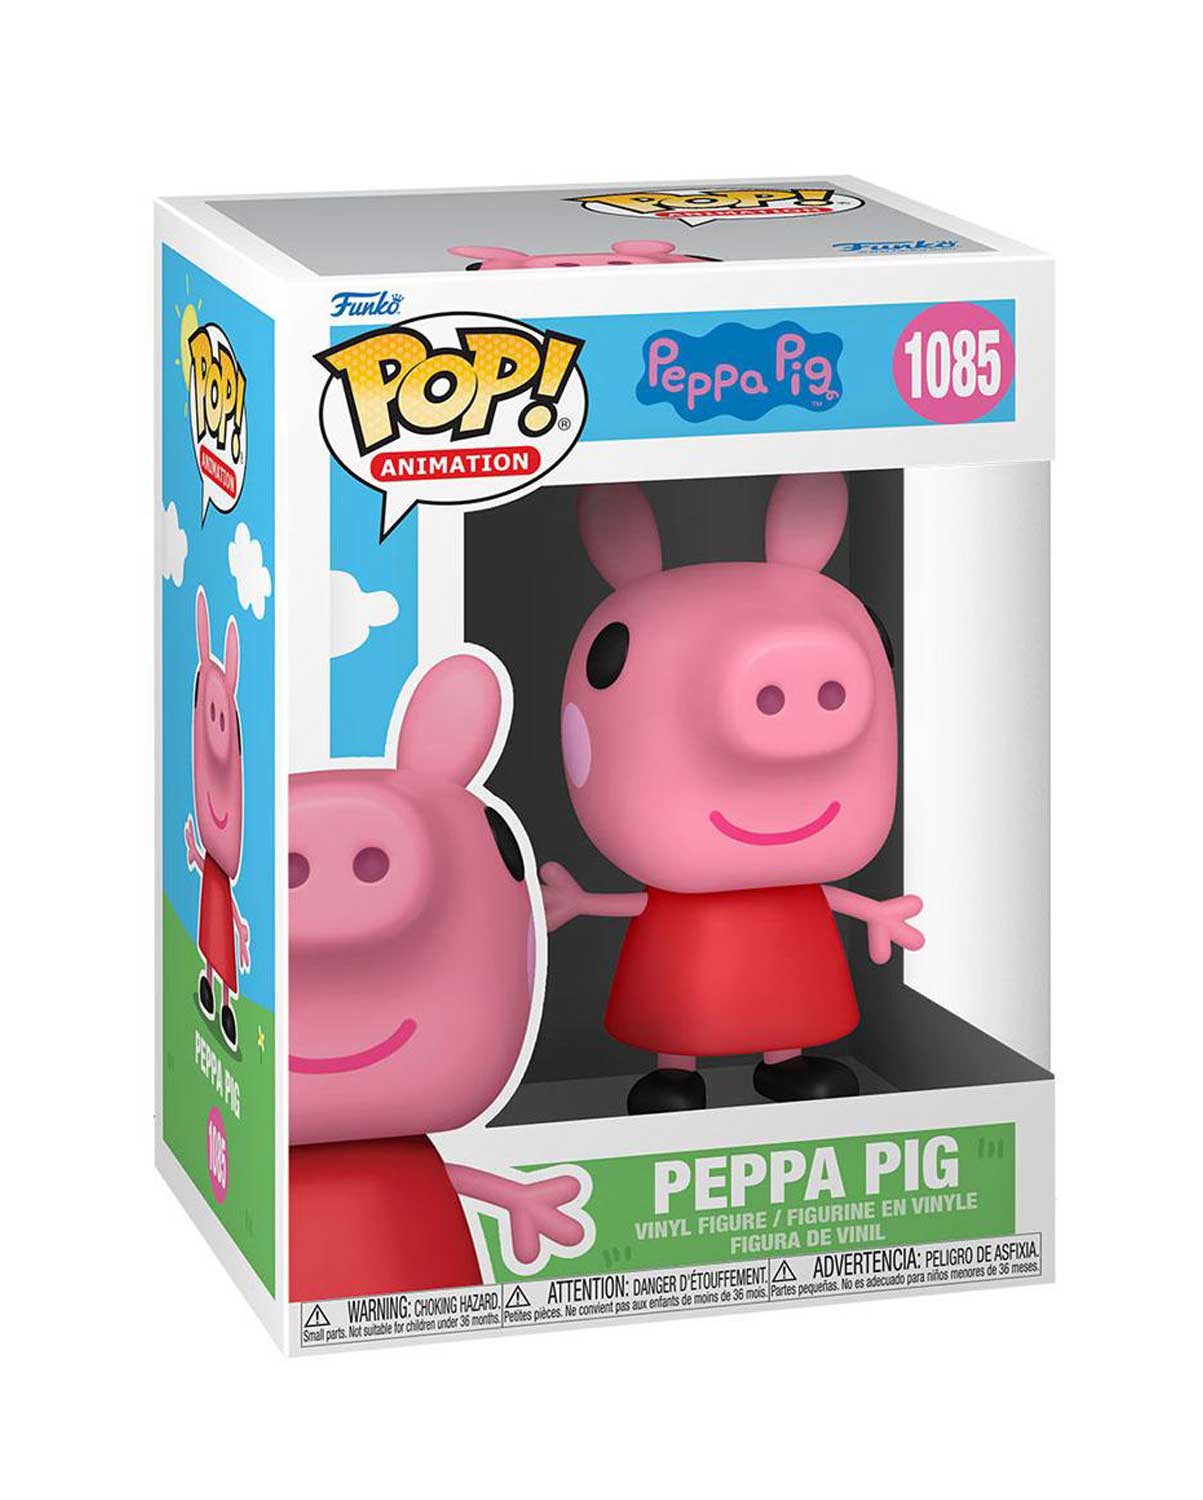 Bobble Figure Animation - Peppa Pig POP! - Peppa Pig 